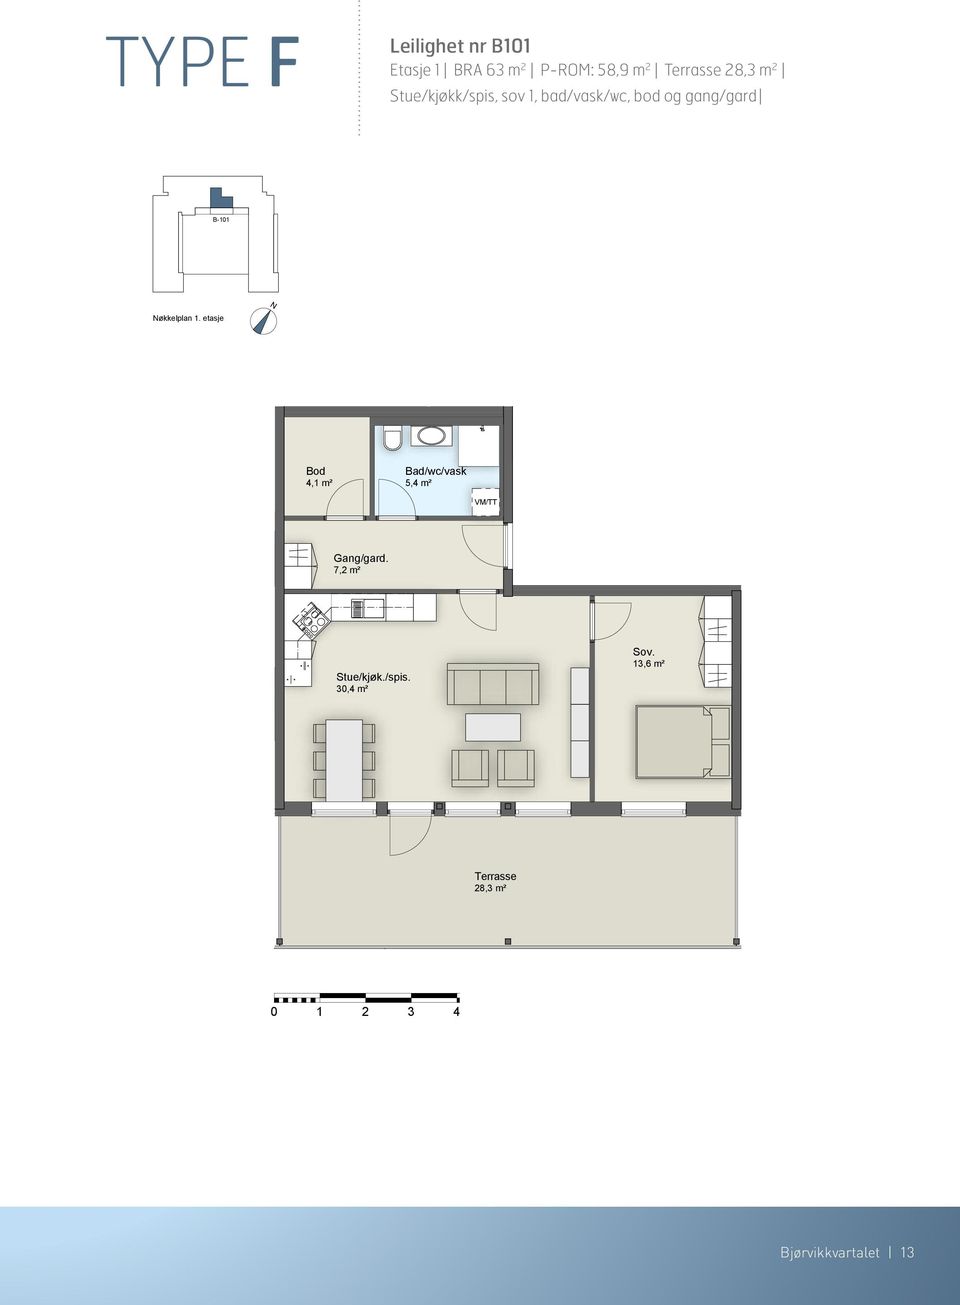 etasje 4,1 m² Bad/wc/vask 5,4 m² VM/TT 7,2 m² Stue/kjøk./spis. 30,4 m² Sov.